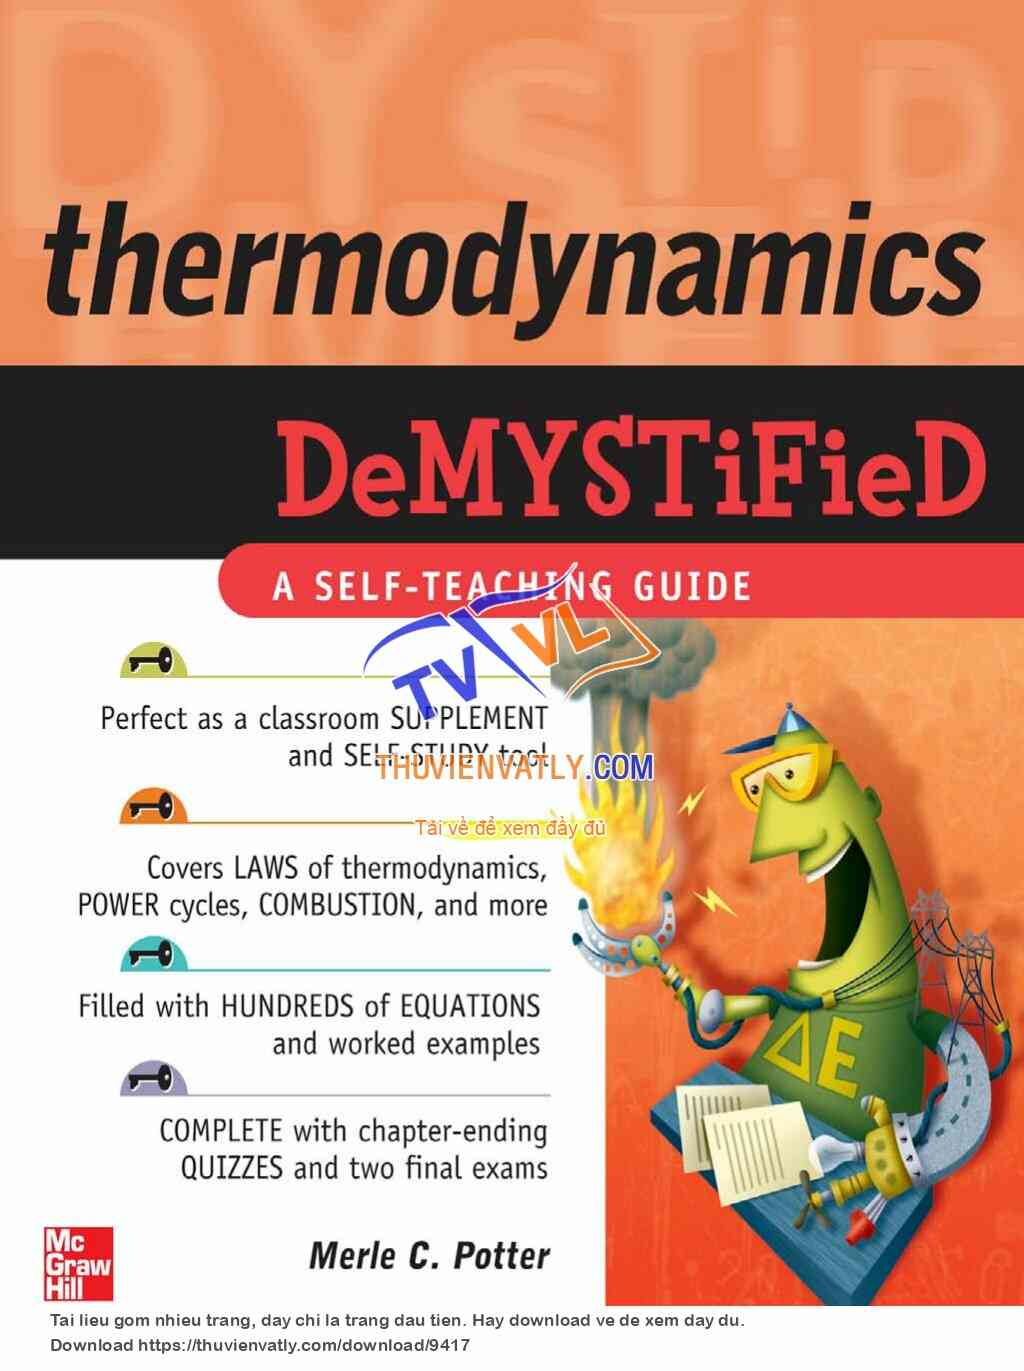 McGraw Hill - Thermodynamics Demystified